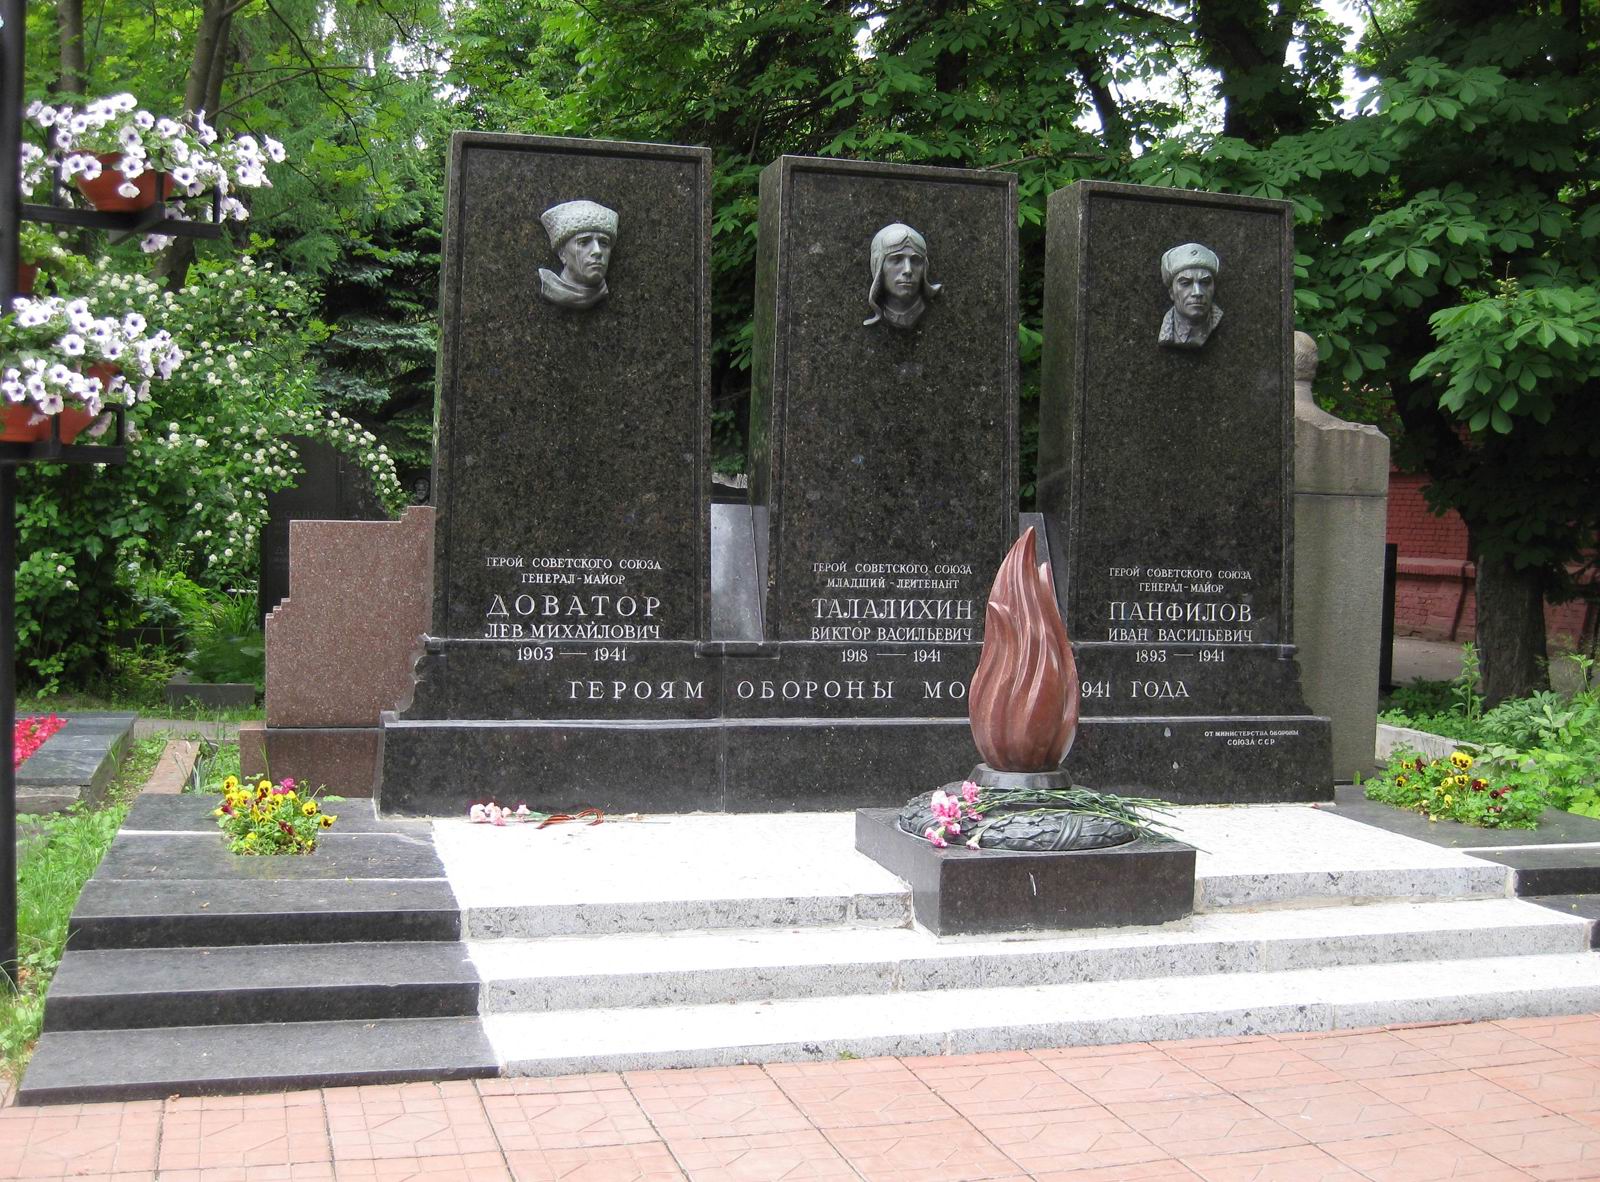 Памятник на могиле Талалихина В.В. (1918-1941), Панфилова И.В. (1893-1941) и Доватора Л.М. (1903-1941), ск. В.Павлов, Е.Шуваева, арх. В.Артамонов, на Новодевичьем кладбище (5-24-3).